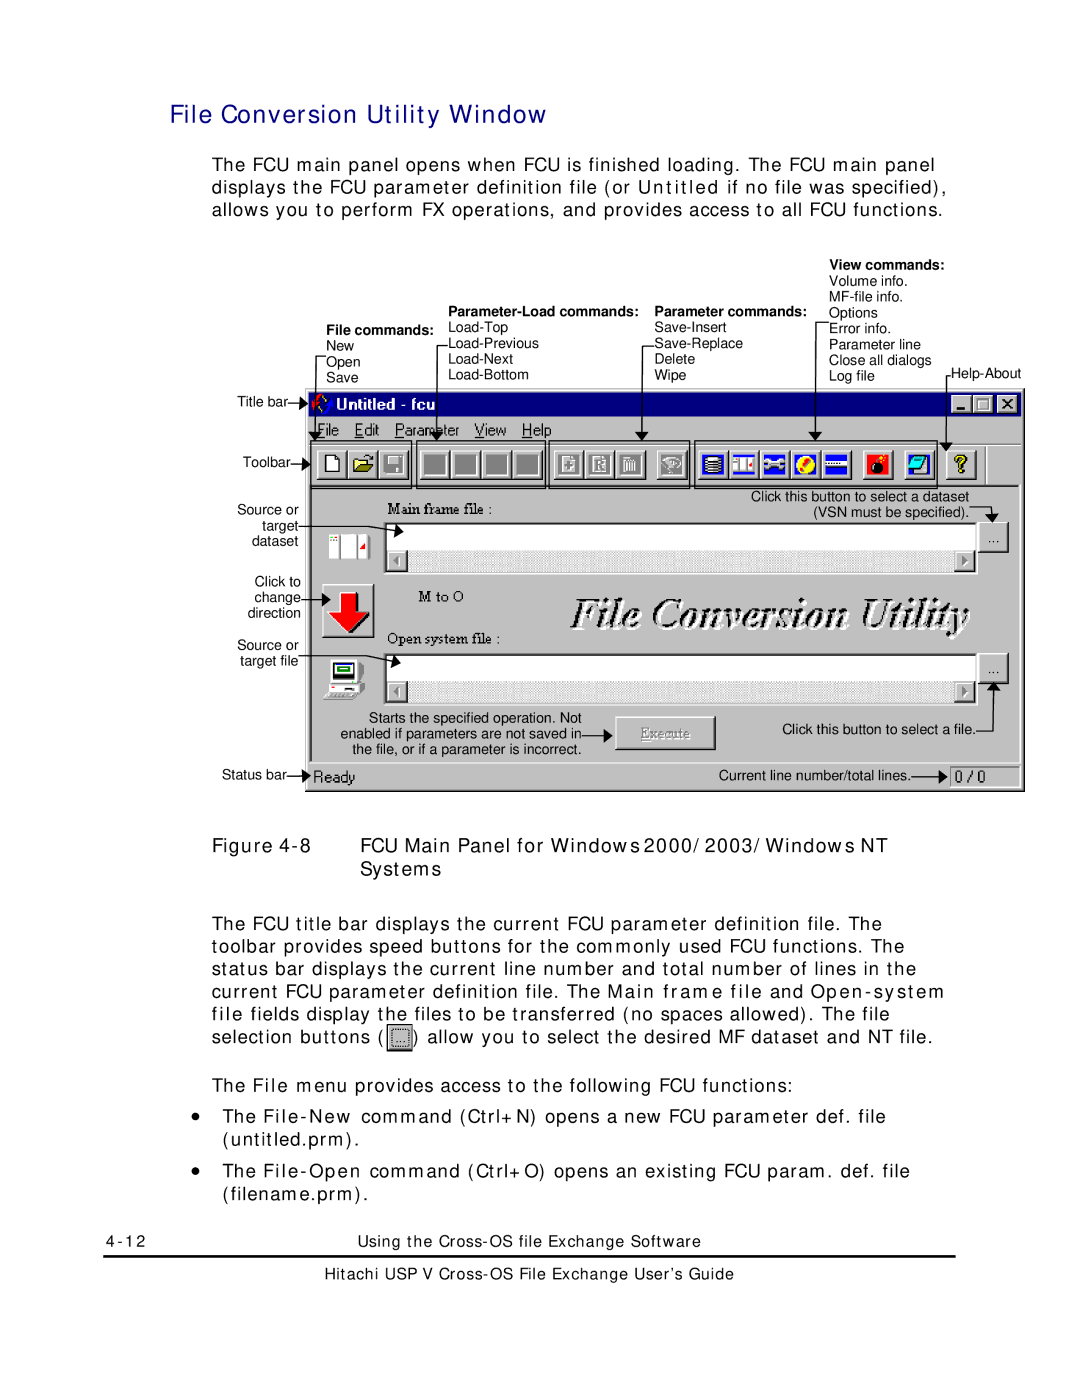 Hitachi MK-96RD647-01 manual File Conversion Utility Window, FCU Main Panel for Windows 2000/2003/Windows NT Systems 